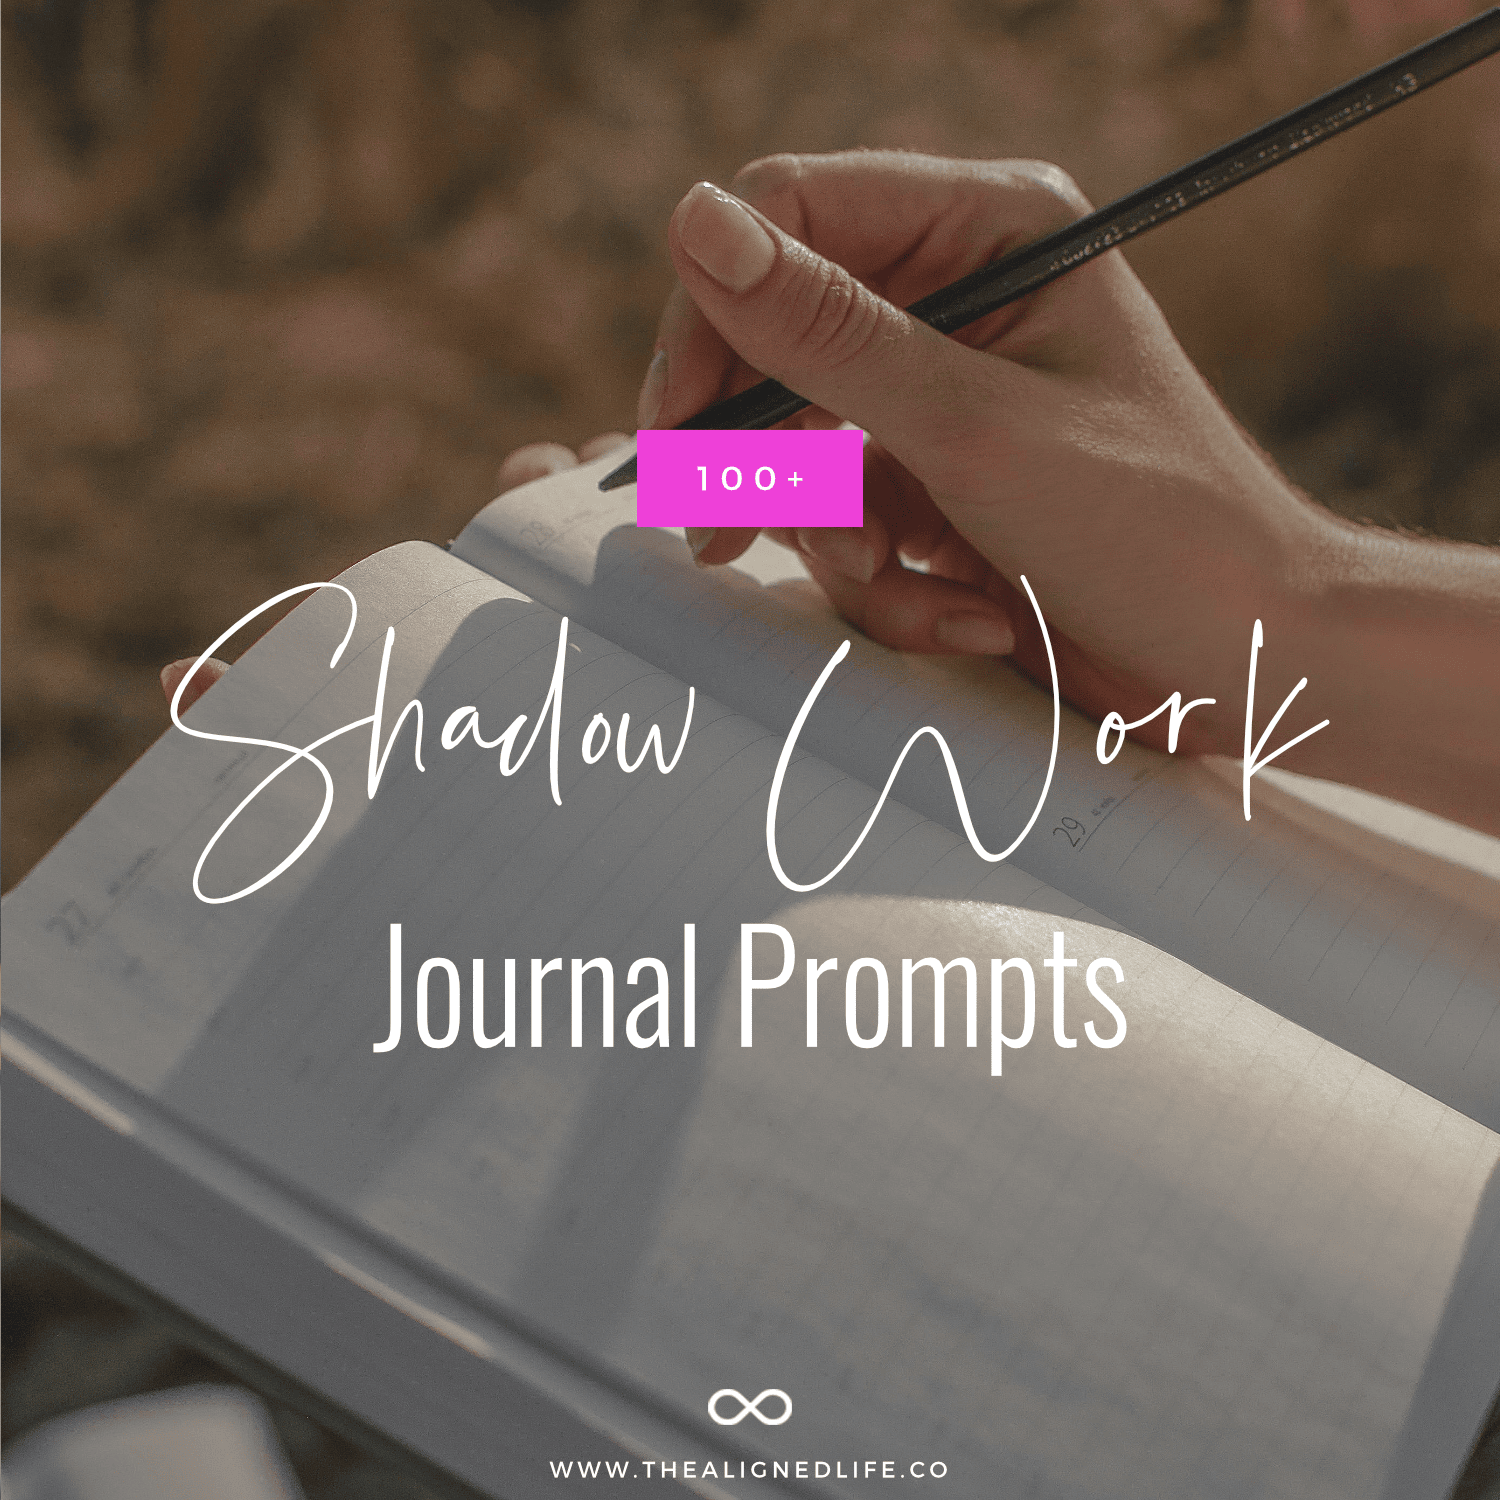 100 Shadow Work Journal Prompts